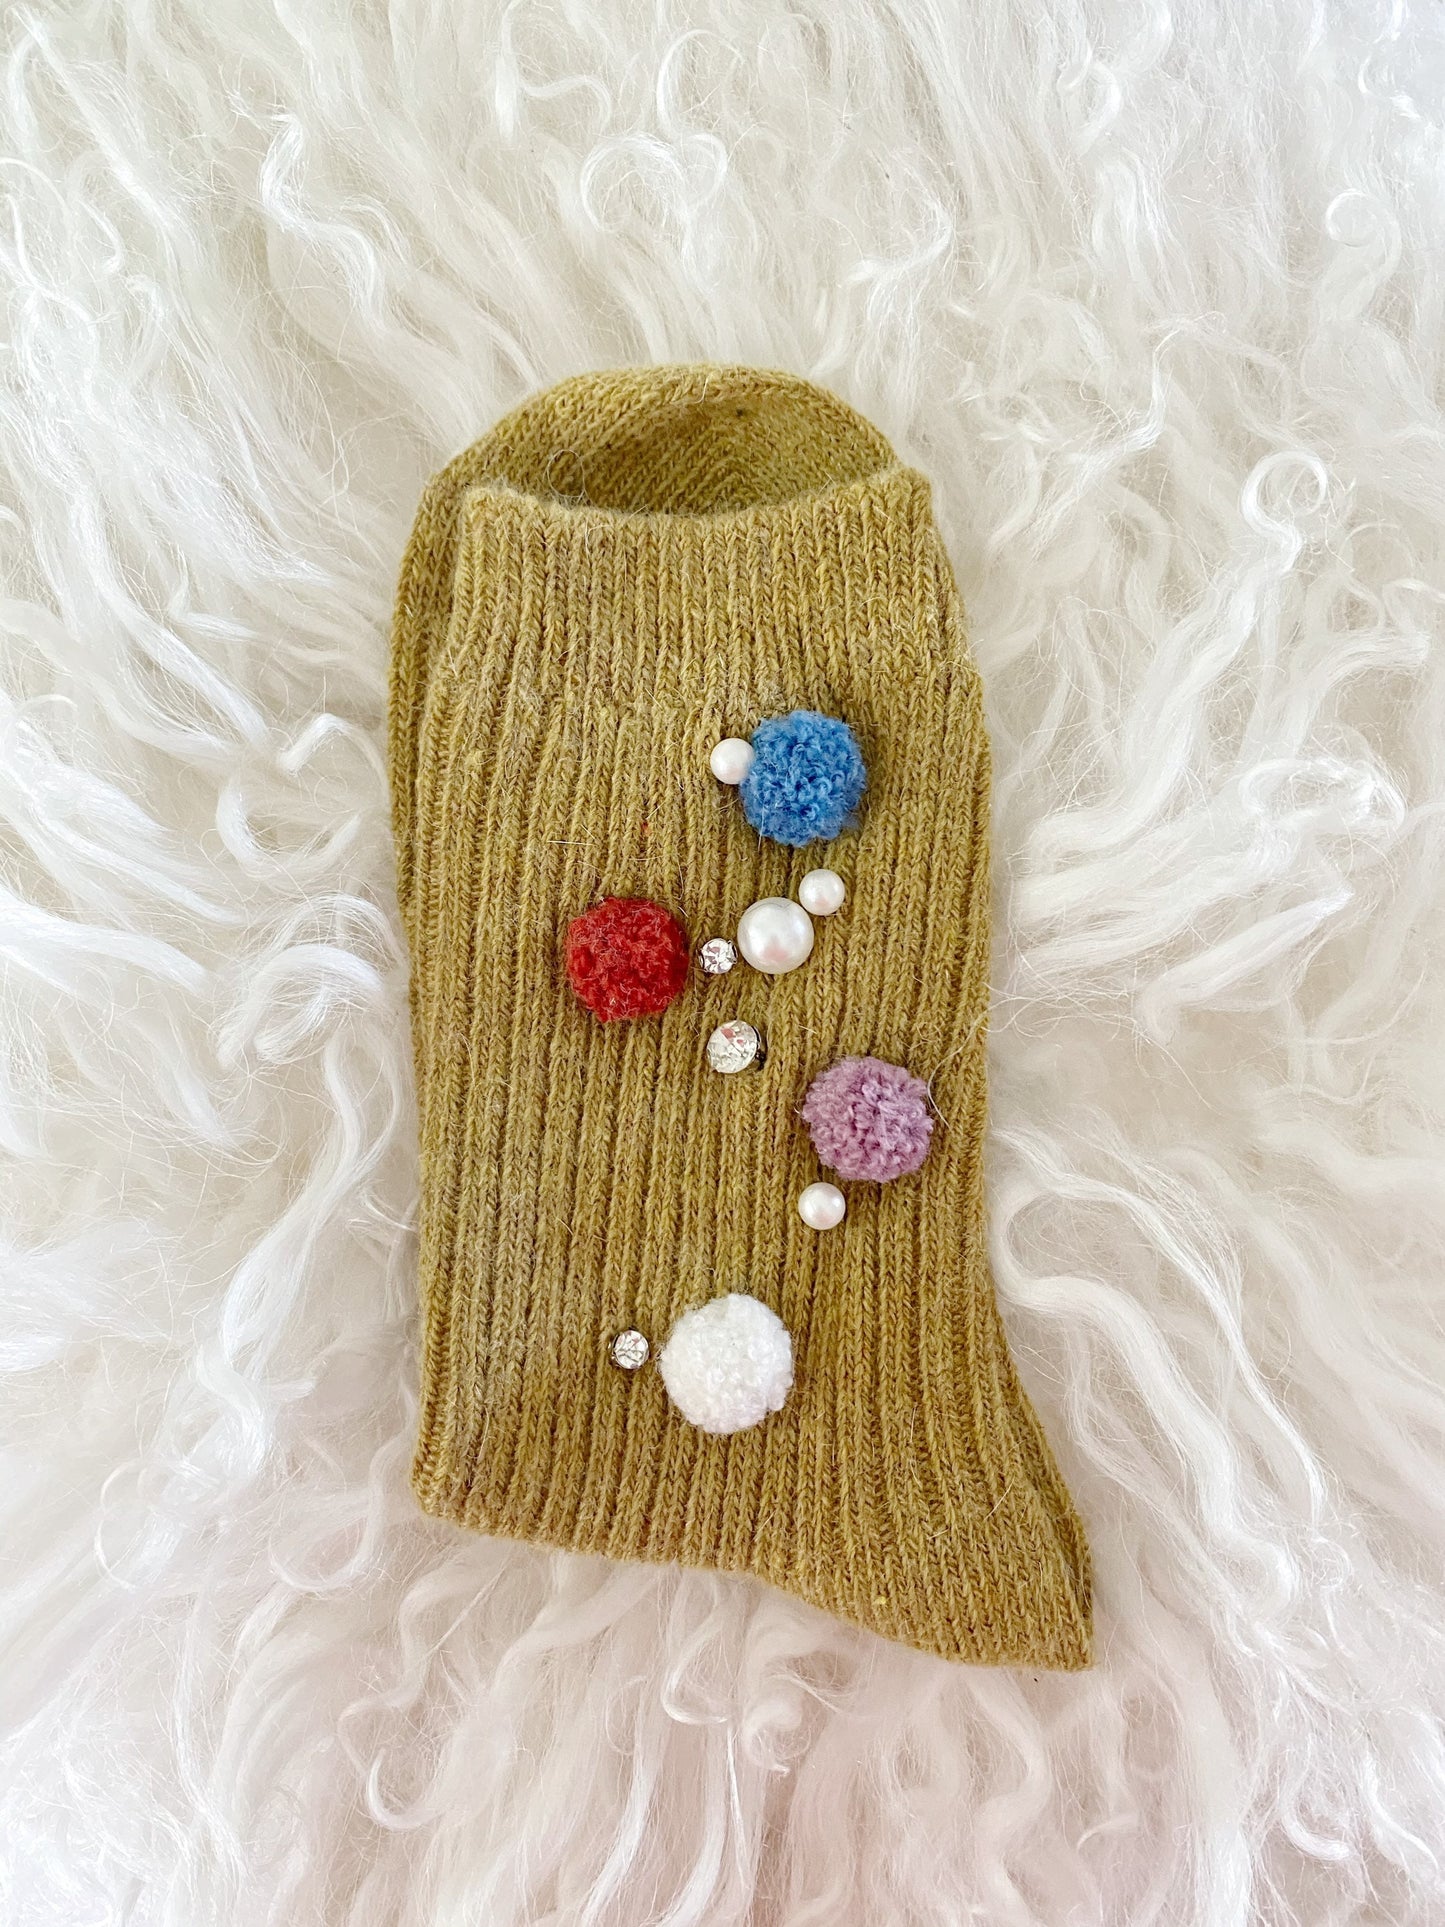 Miss June’s | Women’s | 1 pair| Beading socks｜Creative | Colorful |Craft| Winter | Designed | Art | Gift Idea | Cute | Stylish | Comfortable